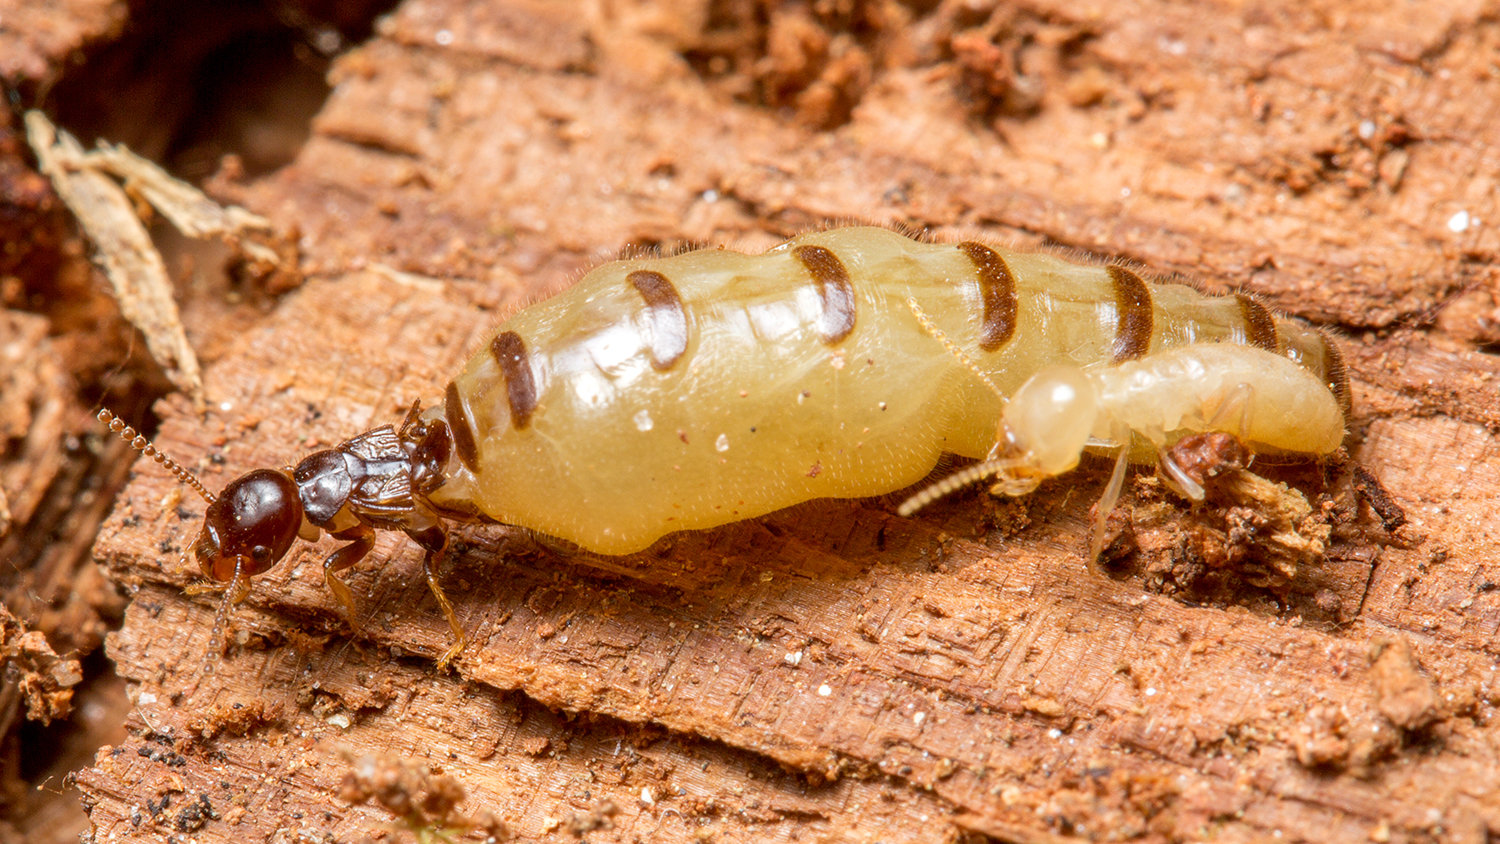 Termite queen, king recognition pheromone identified